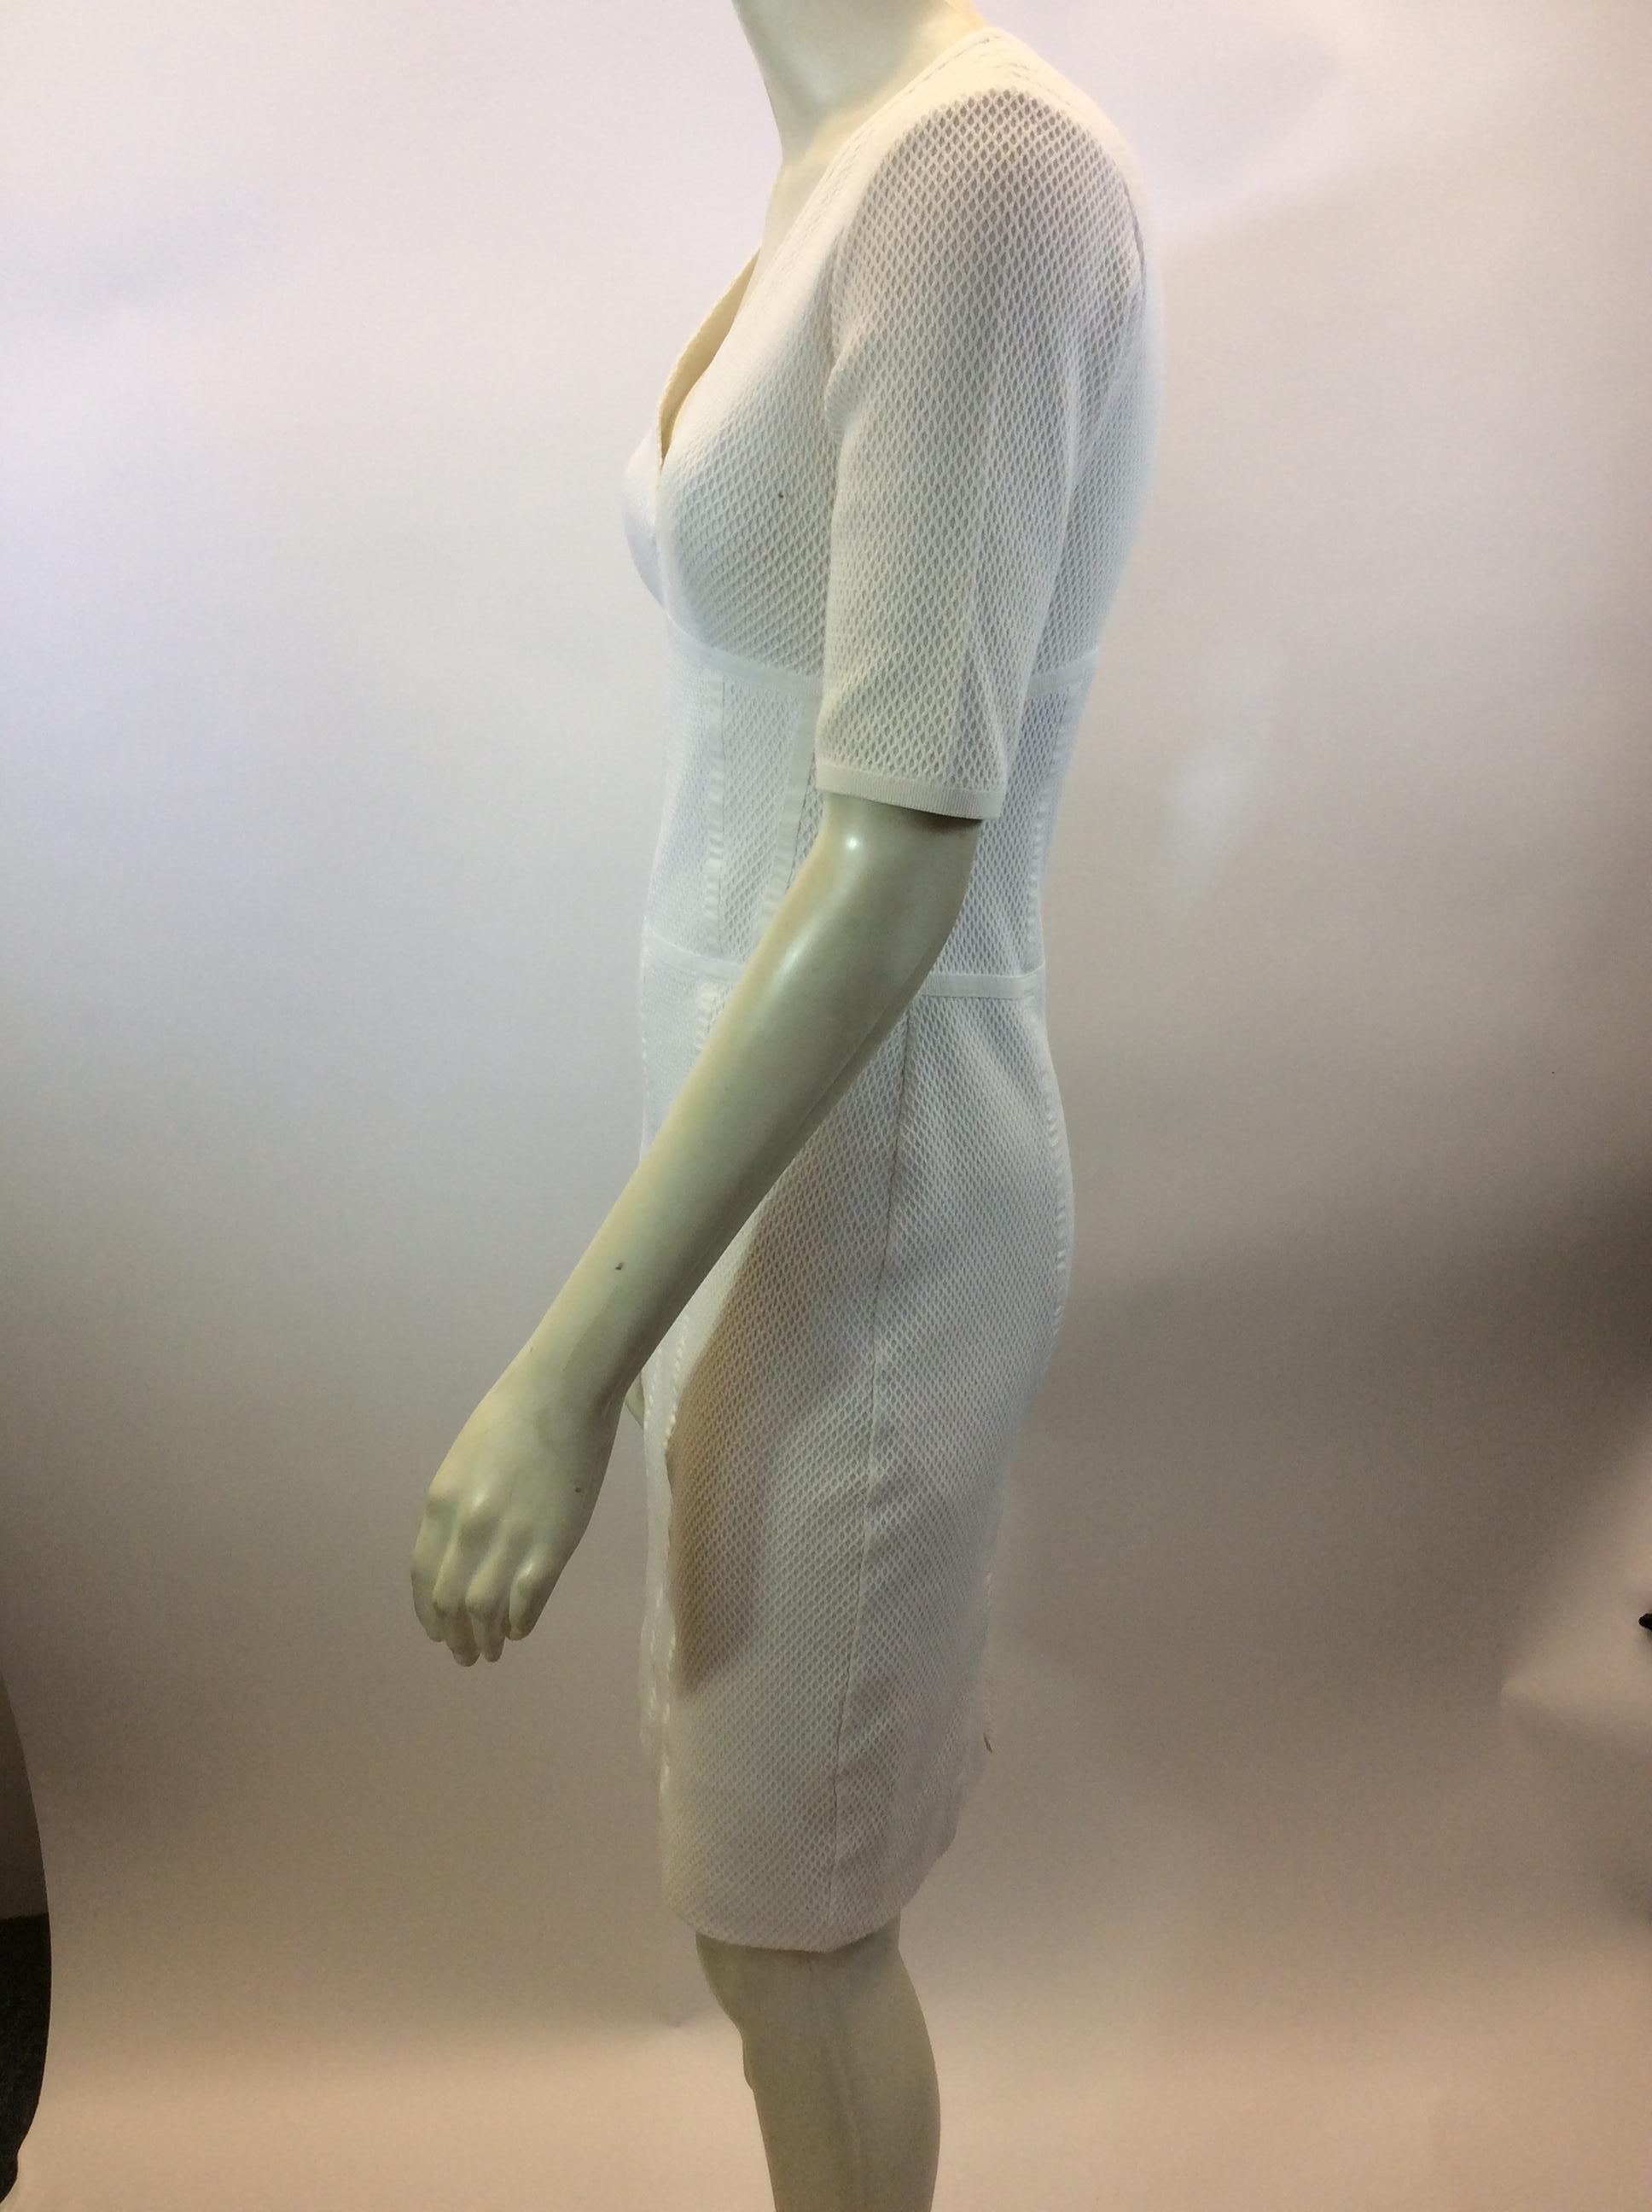 Burberry White Cotton Dress
$250
Made in Bulgaria
70% viscose, 25% cotton, 5% elastane
Size 4
Length 36